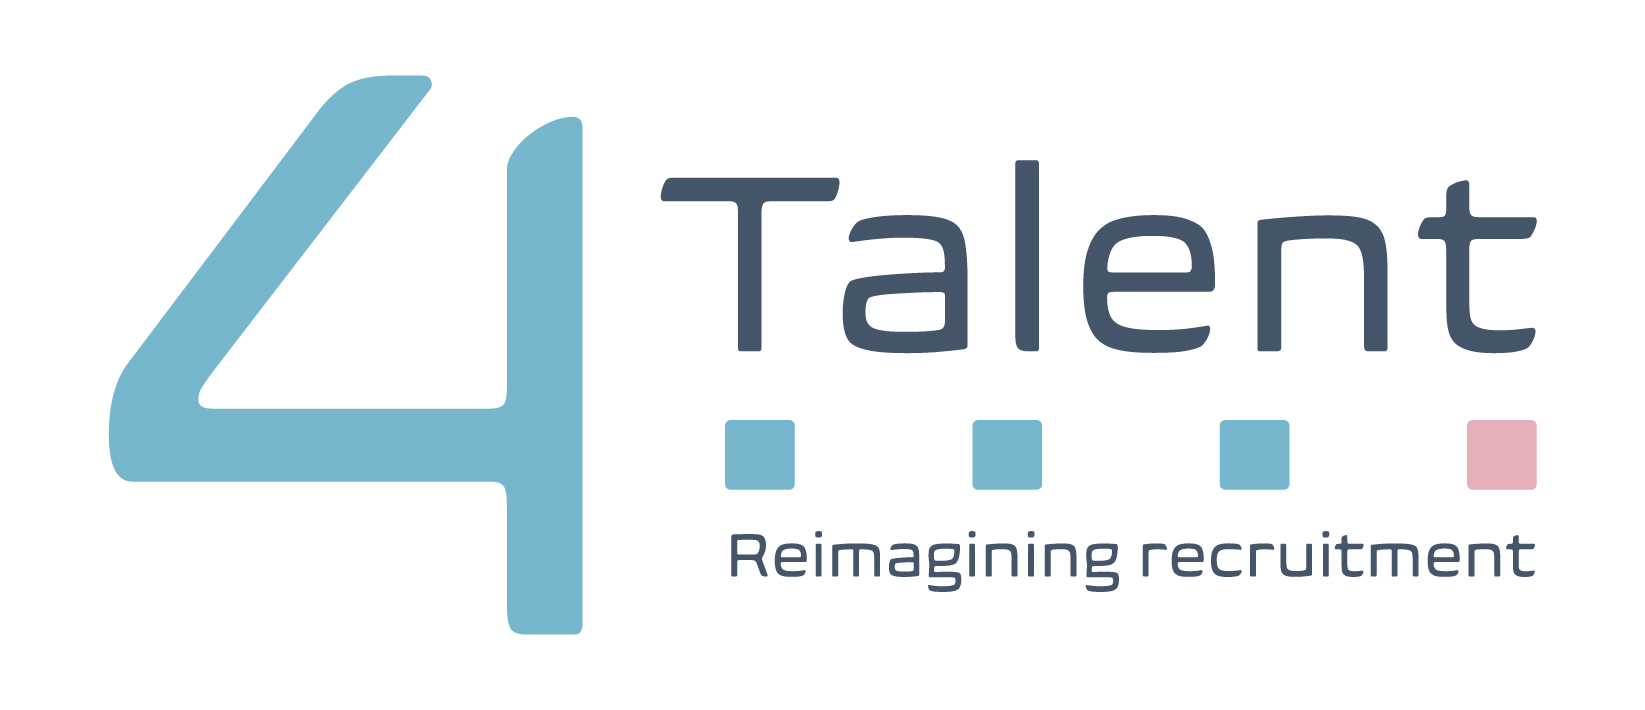 Company logo image - Four Talent Ltd